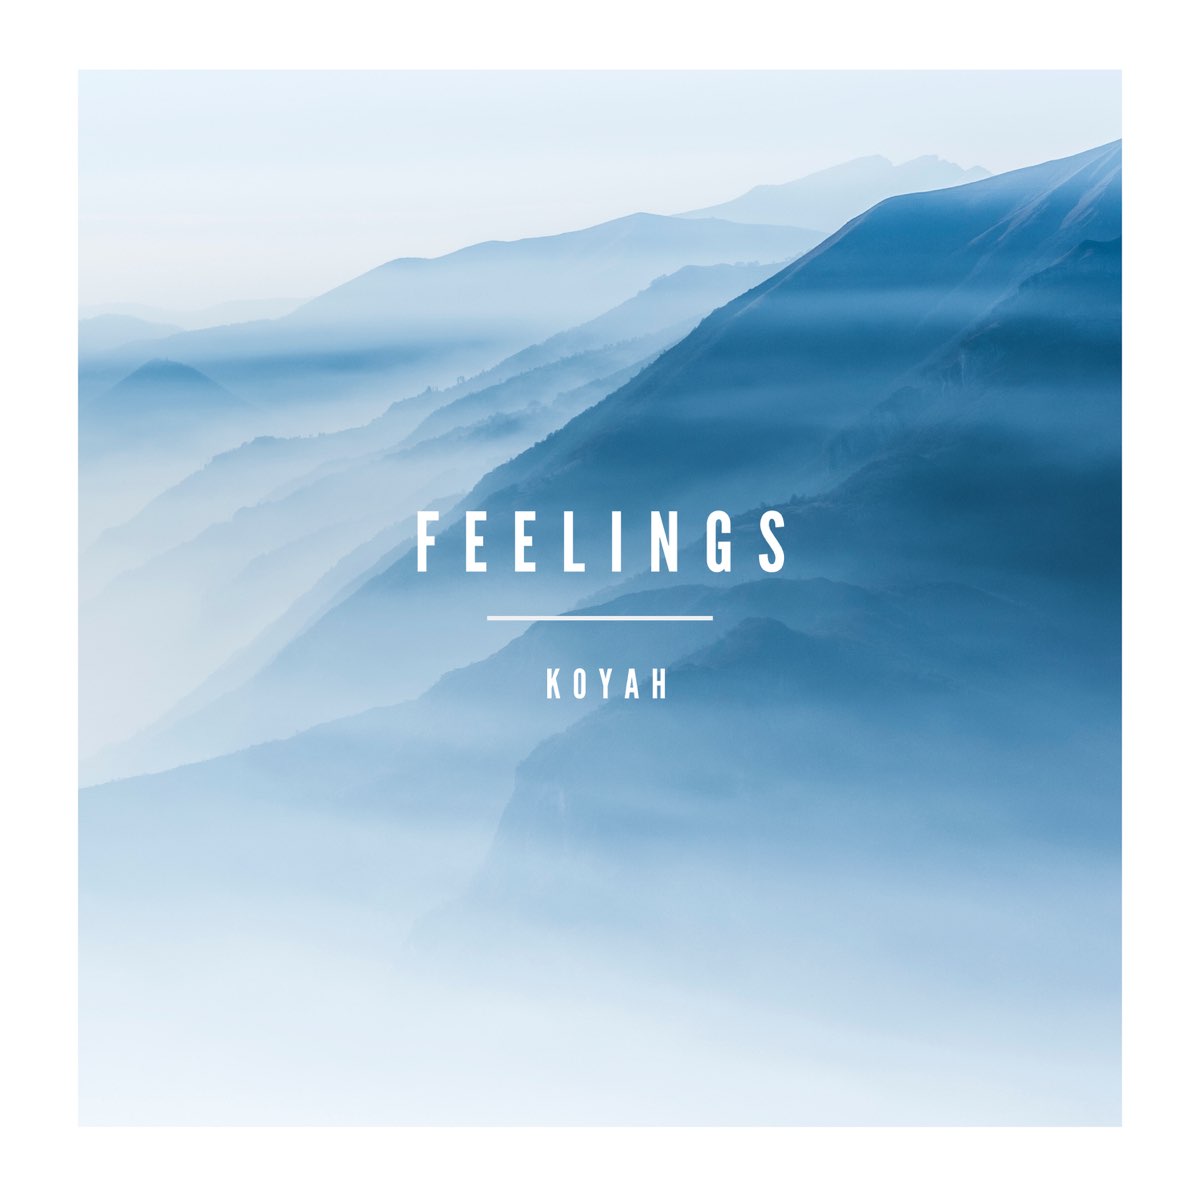 Feelings 9. Feeling песня.